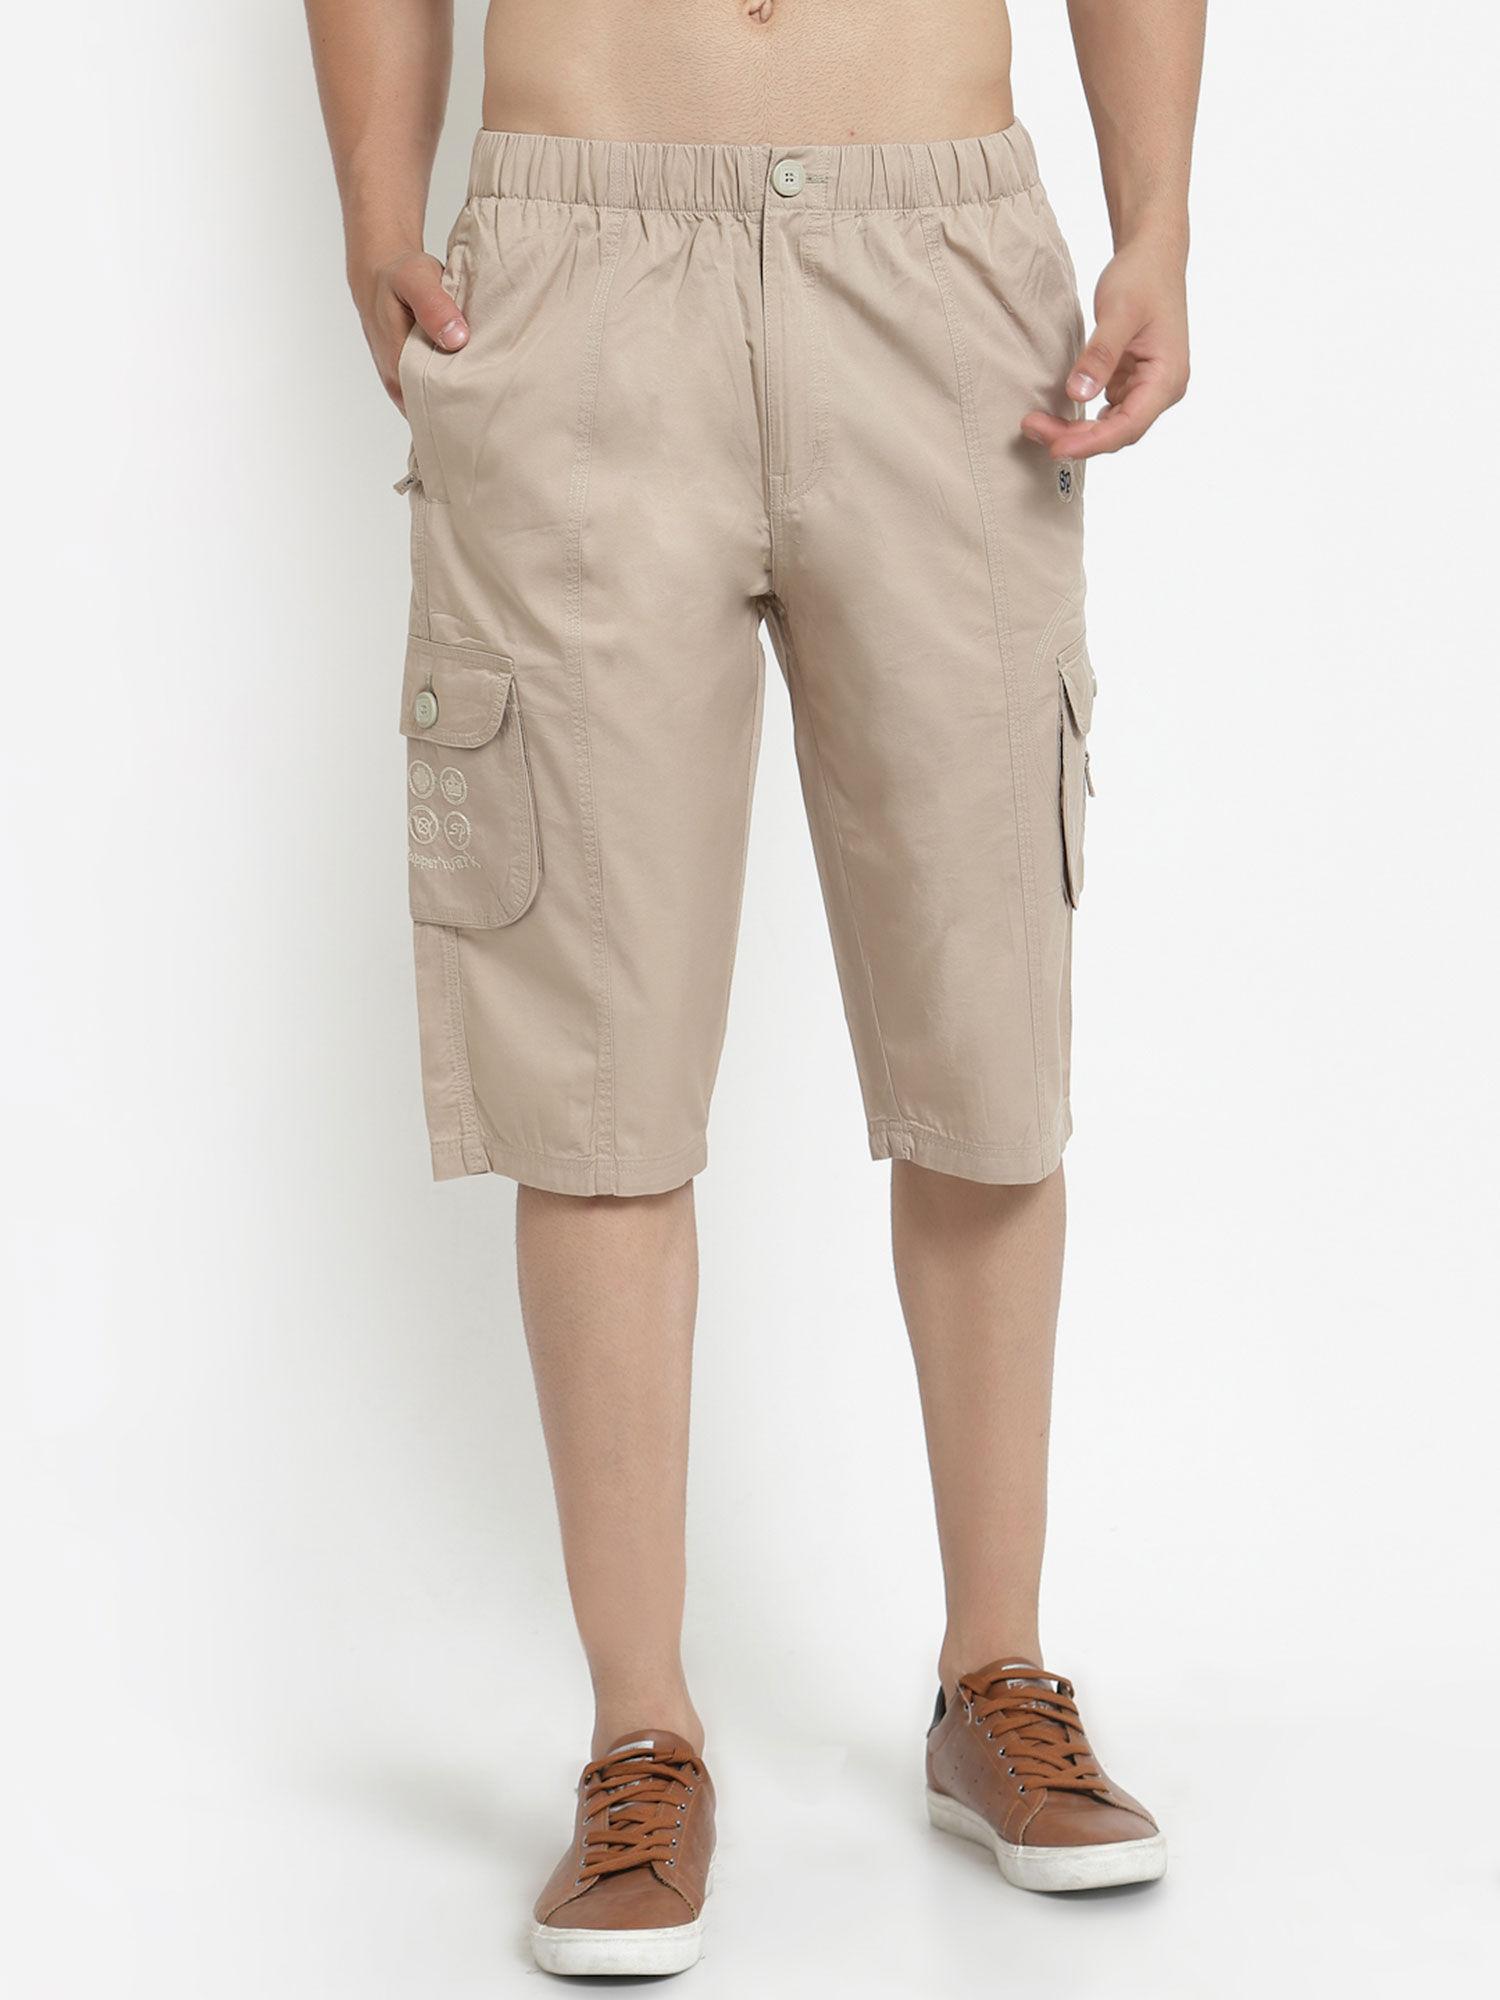 beige cotton casual wear 3/4 shorts